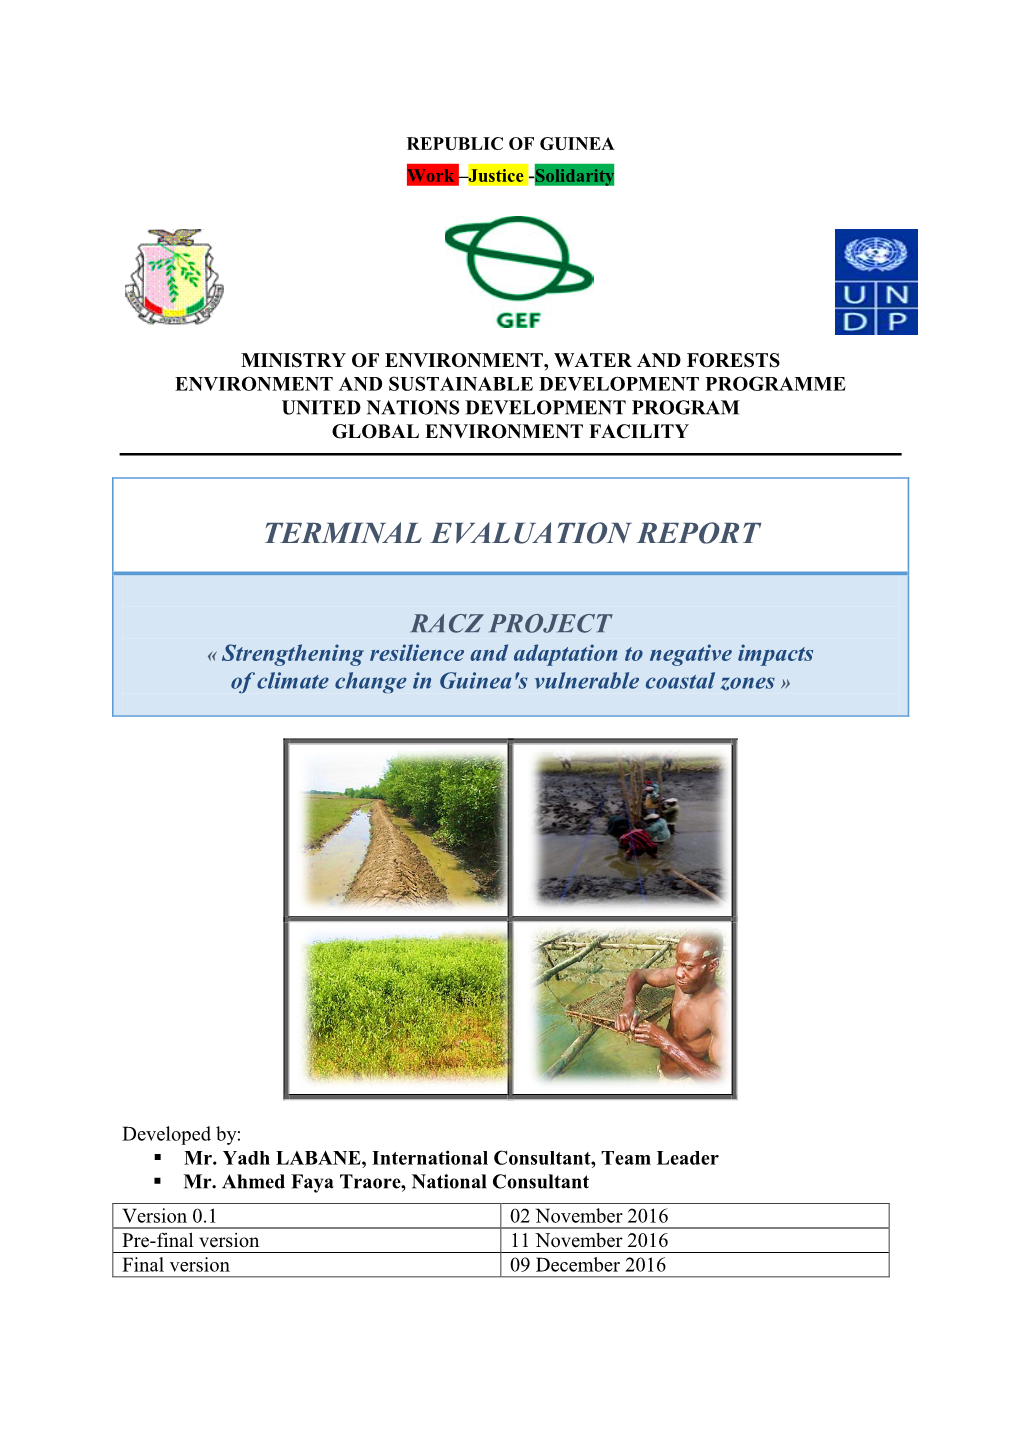 RAZC Project Final Evaluation Report VF 2016.Pdf